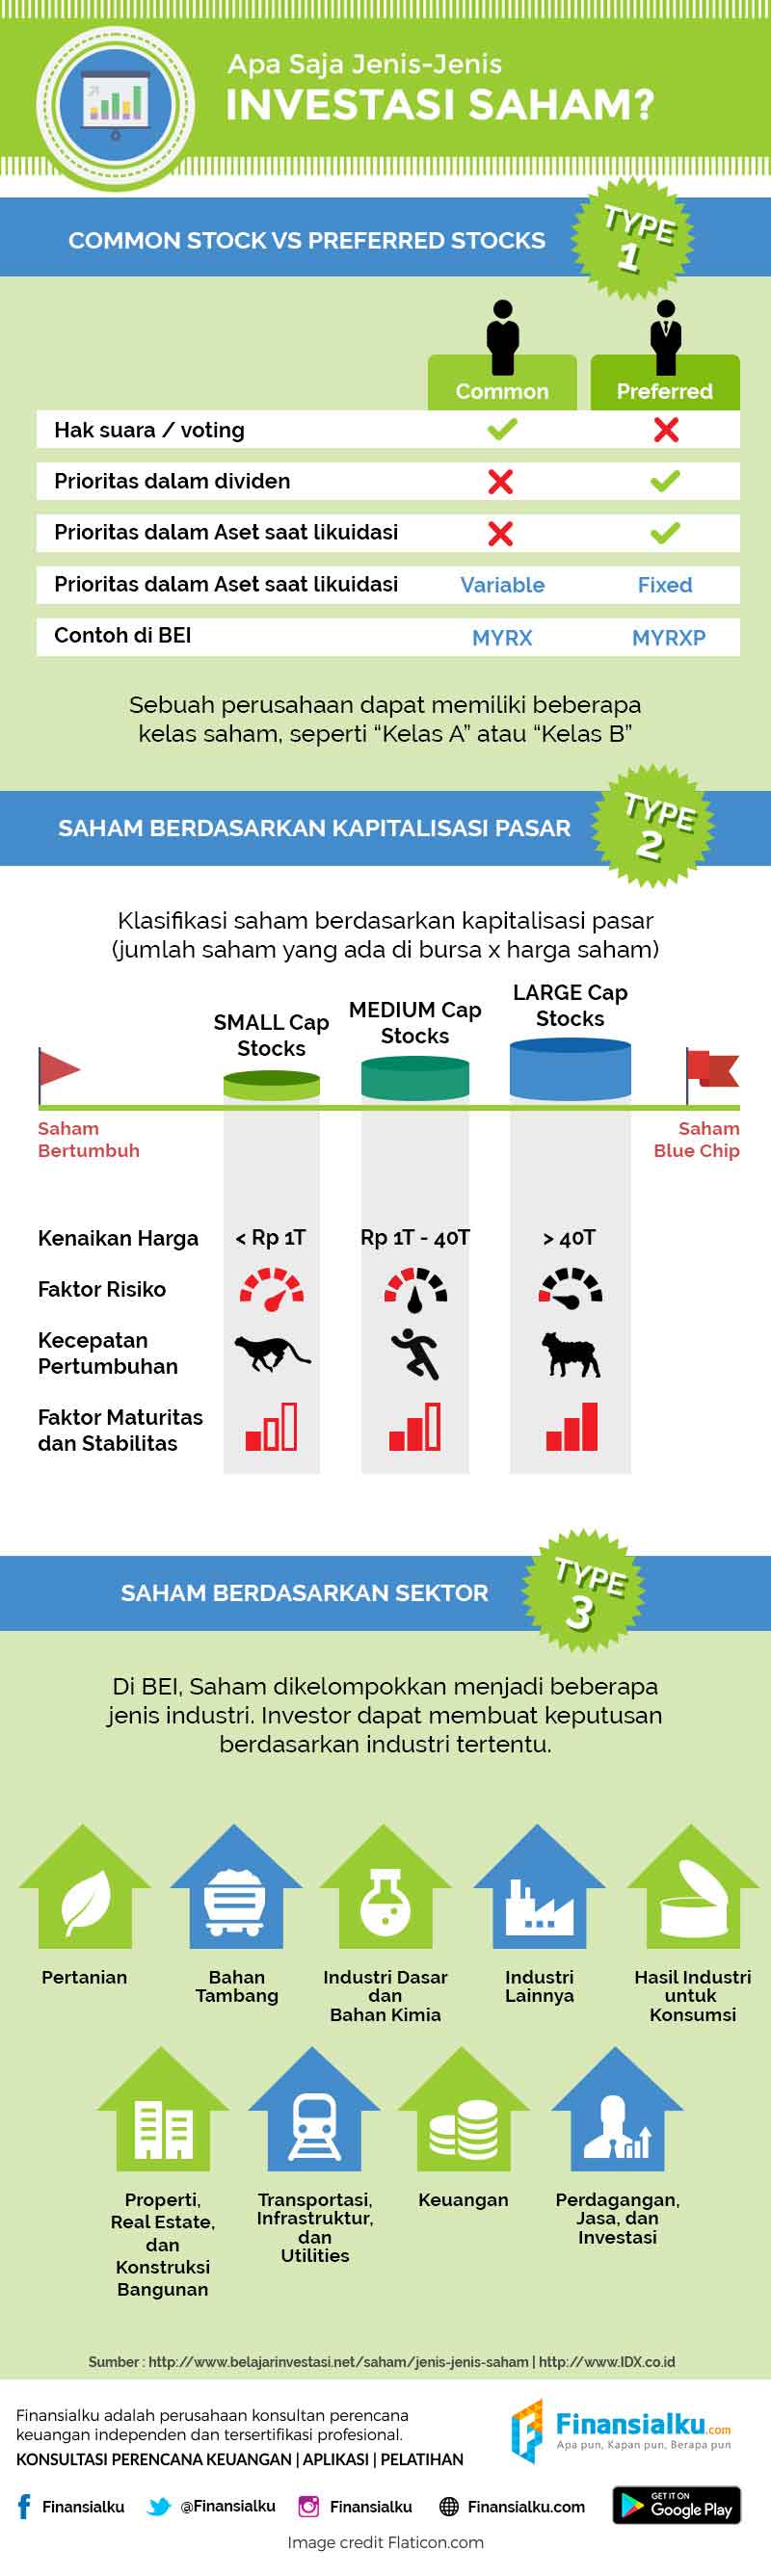 Infografis Apa Saja Jenis-Jenis Investasi Saham 02 - Finansialku